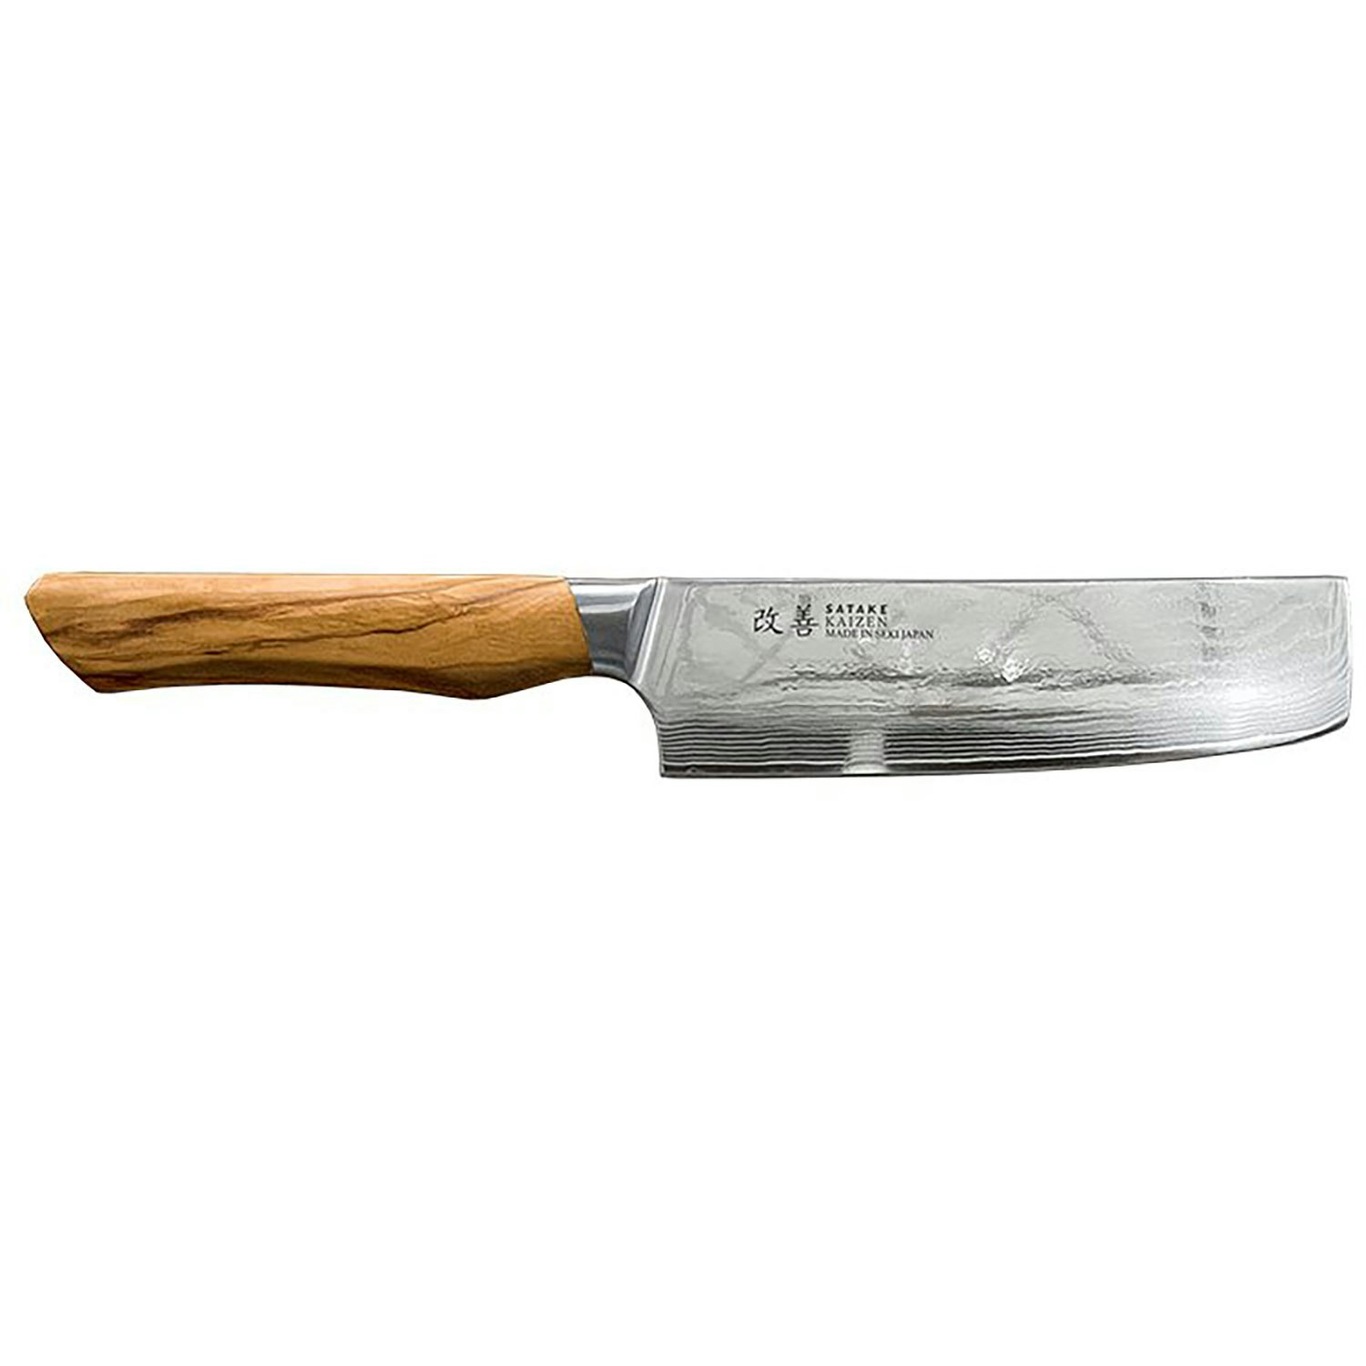 https://royaldesign.com/image/2/satake-satake-kaizen-nakiri-vegetable-knife-16cm-0?w=800&quality=80